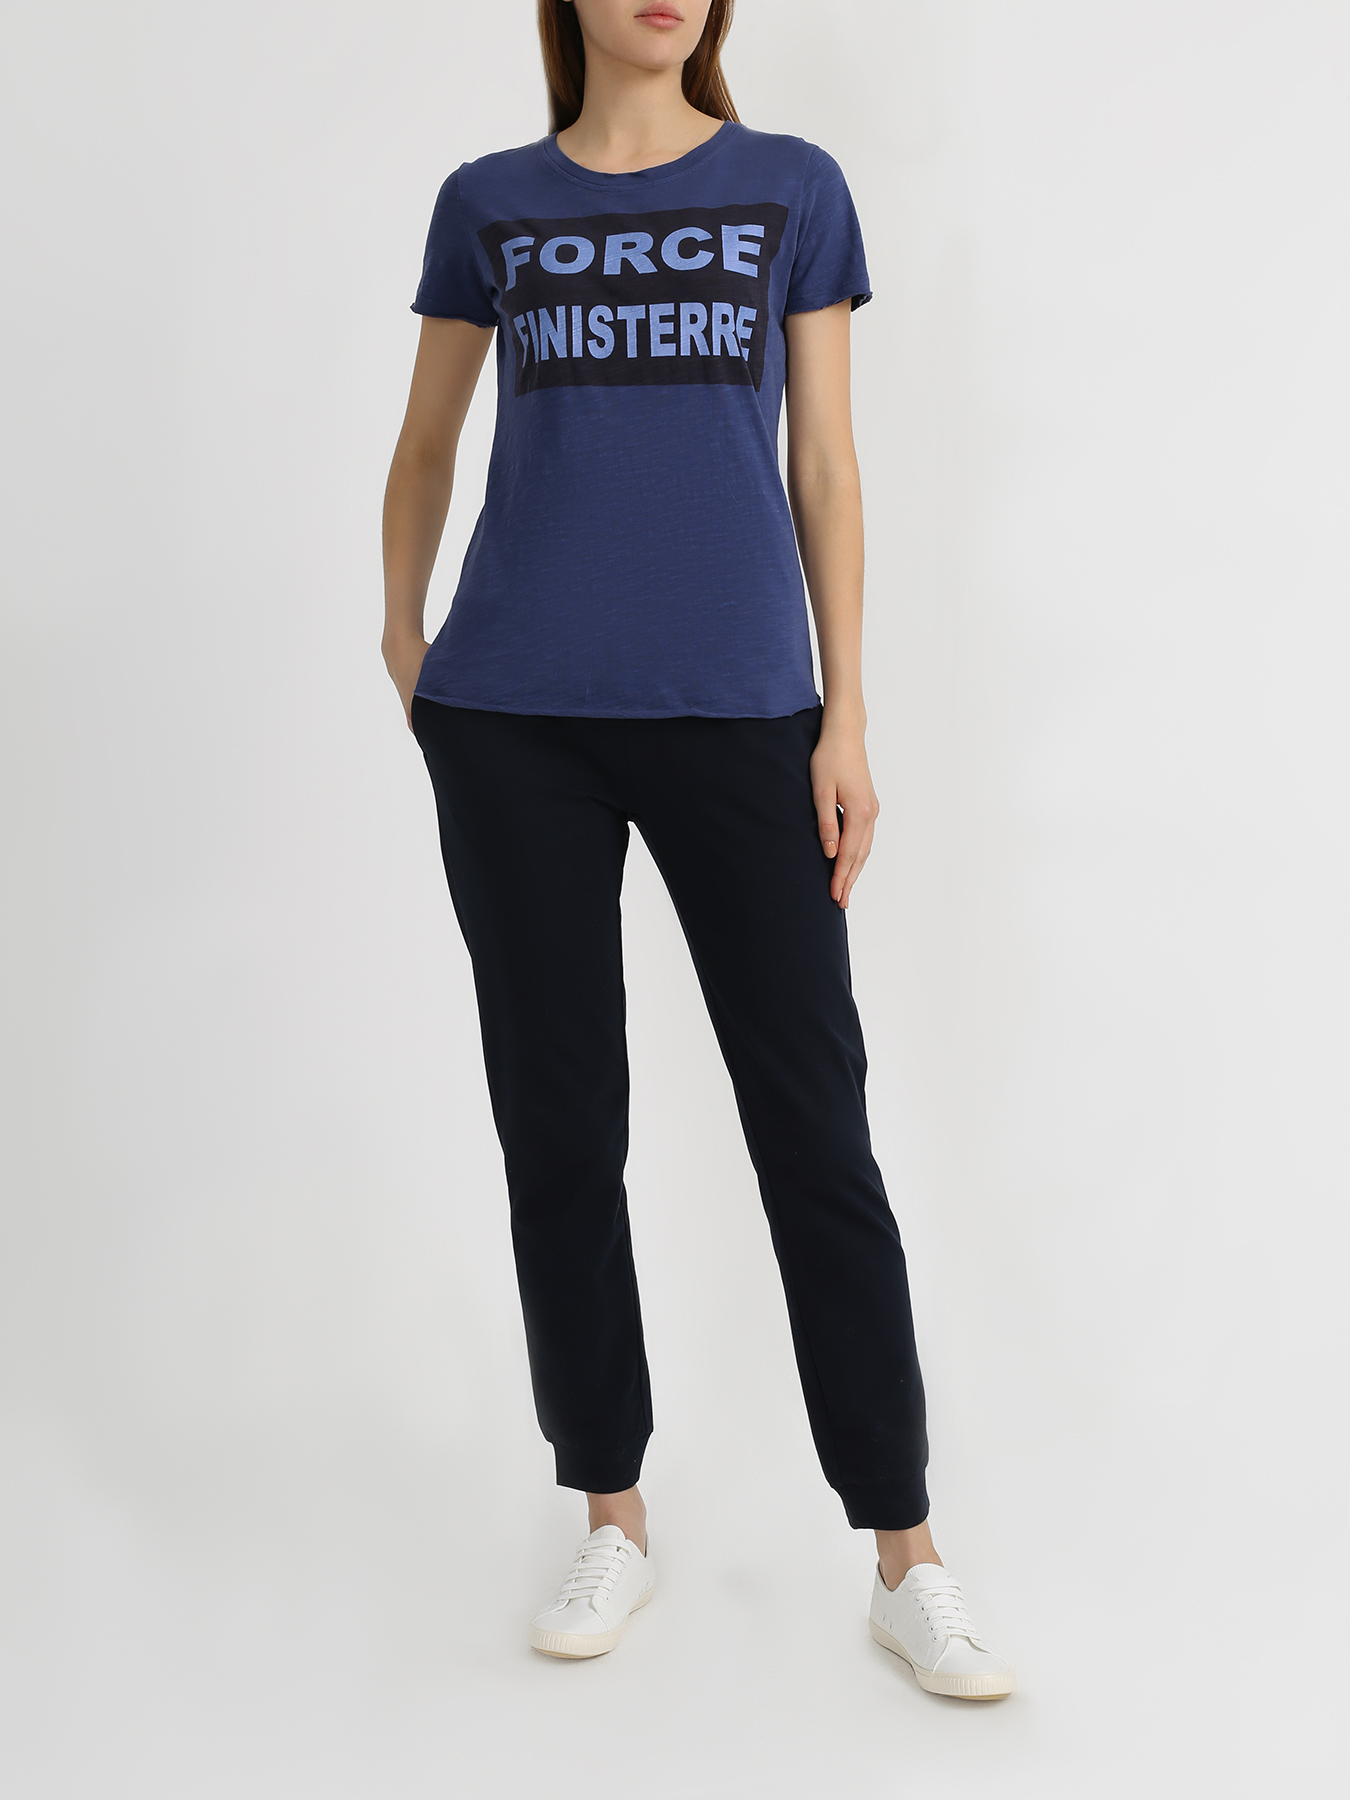 Finisterre Force Женская футболка 334267-022